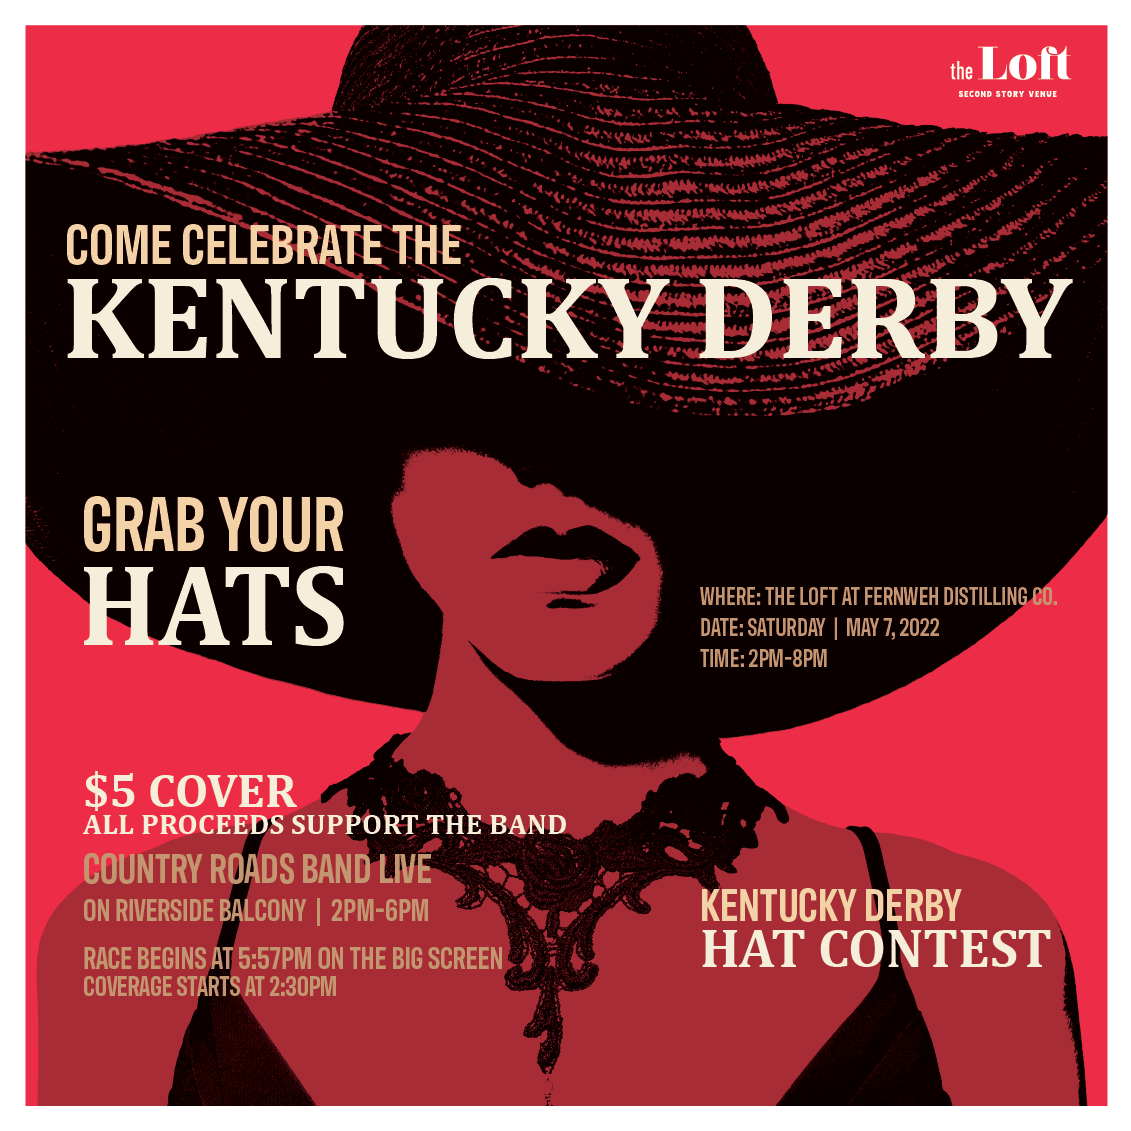 Kentucky Derby Celebration Visit Hermann